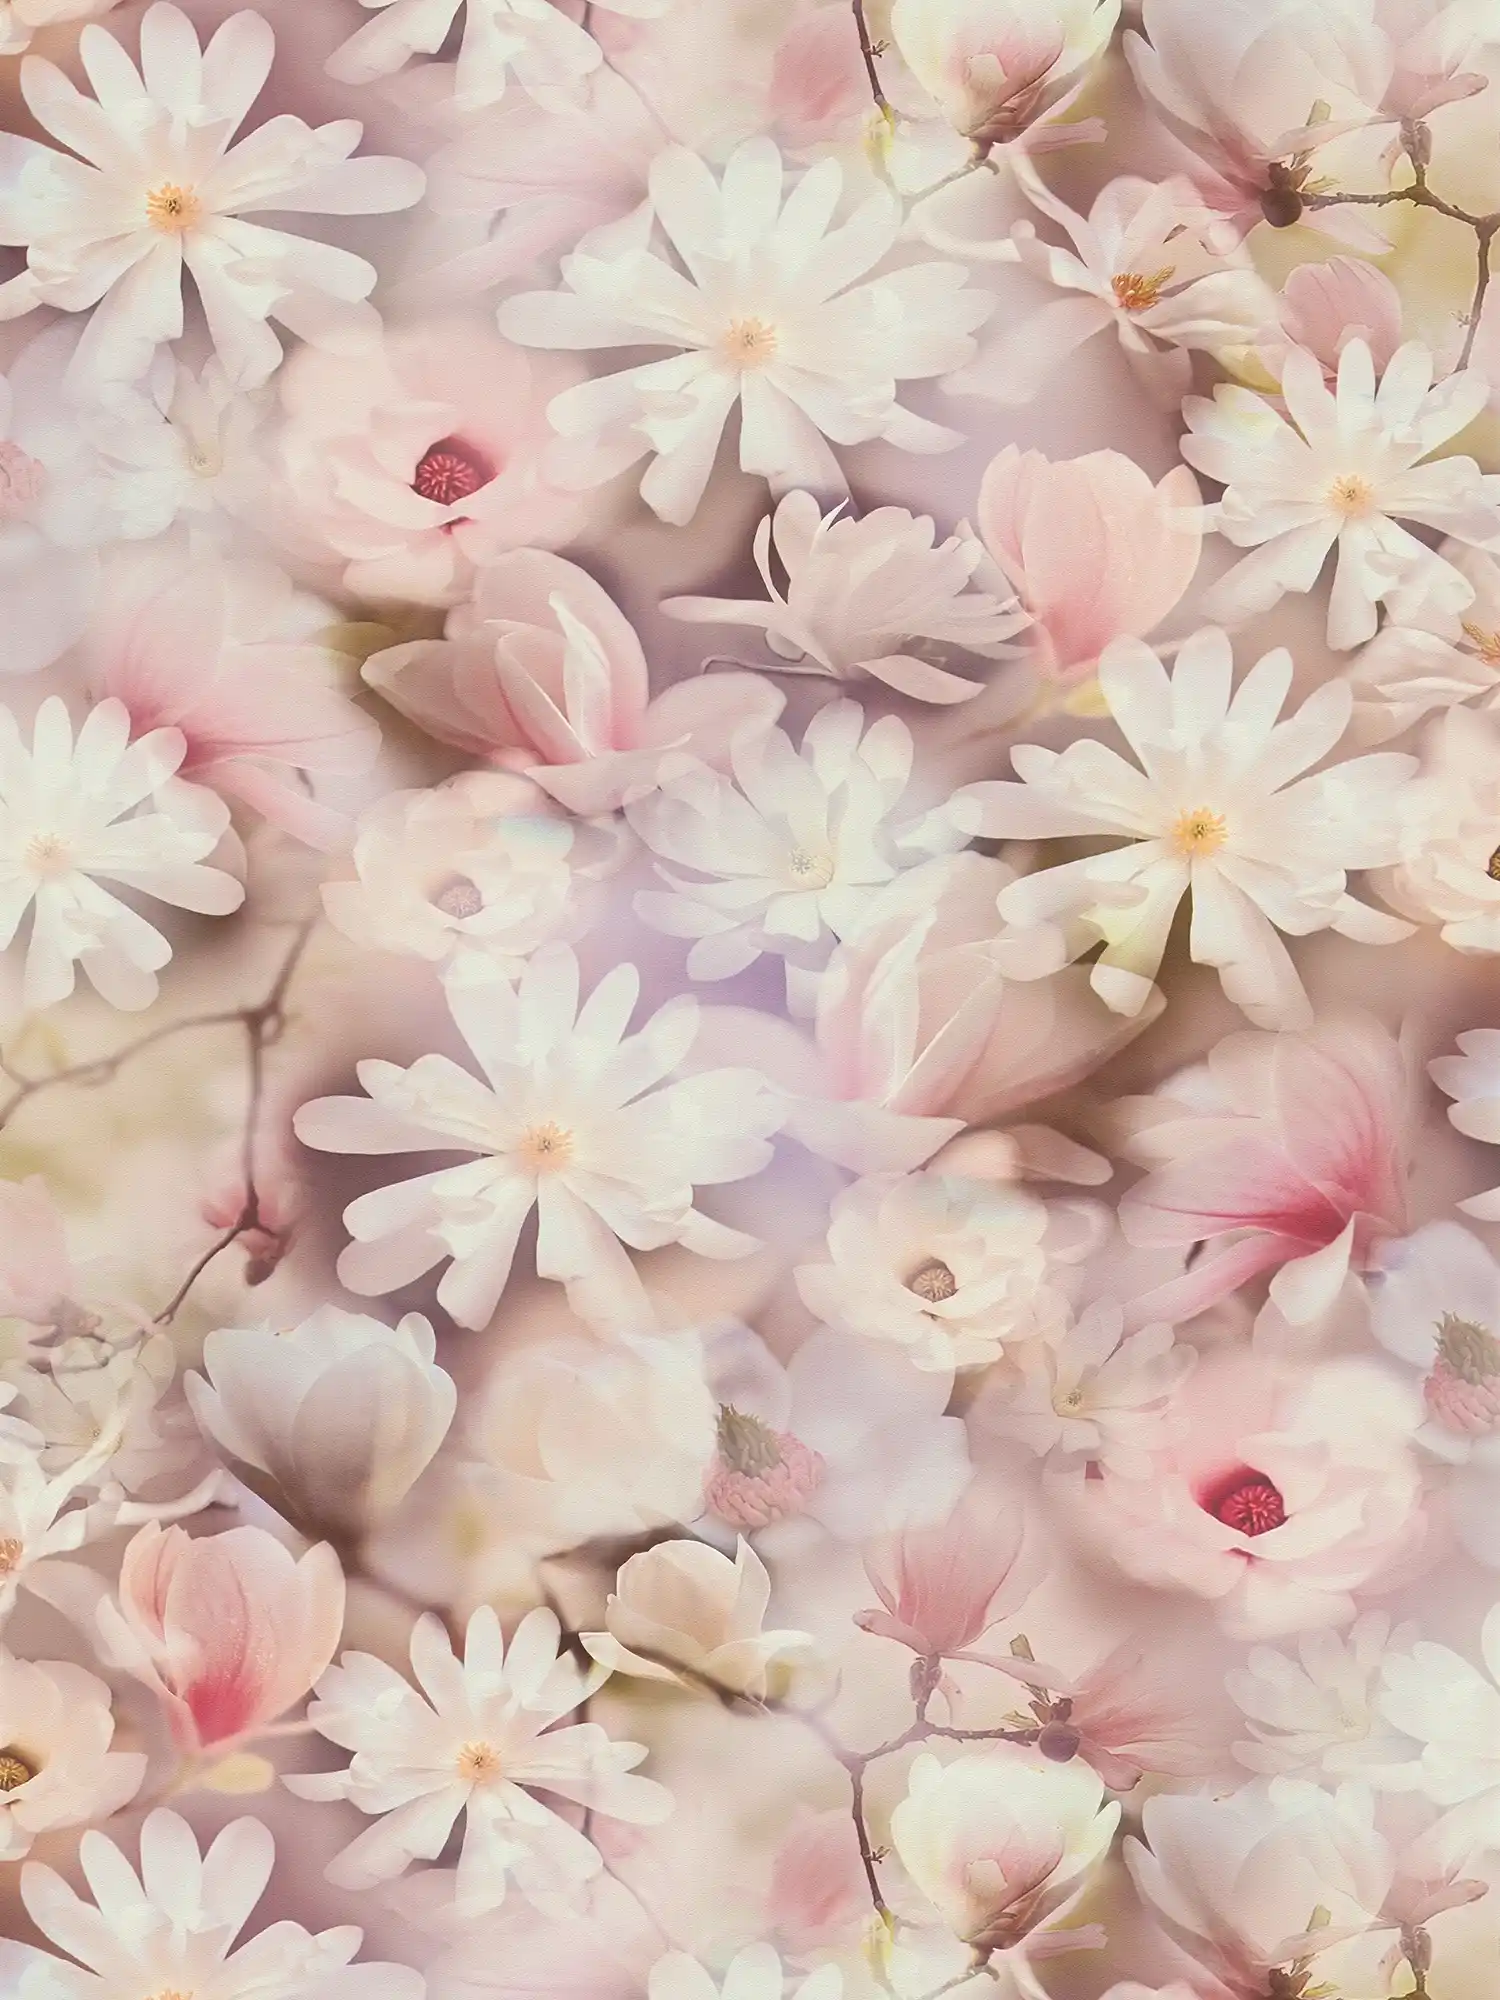 Bloemencollage ontwerp in roze en wit
